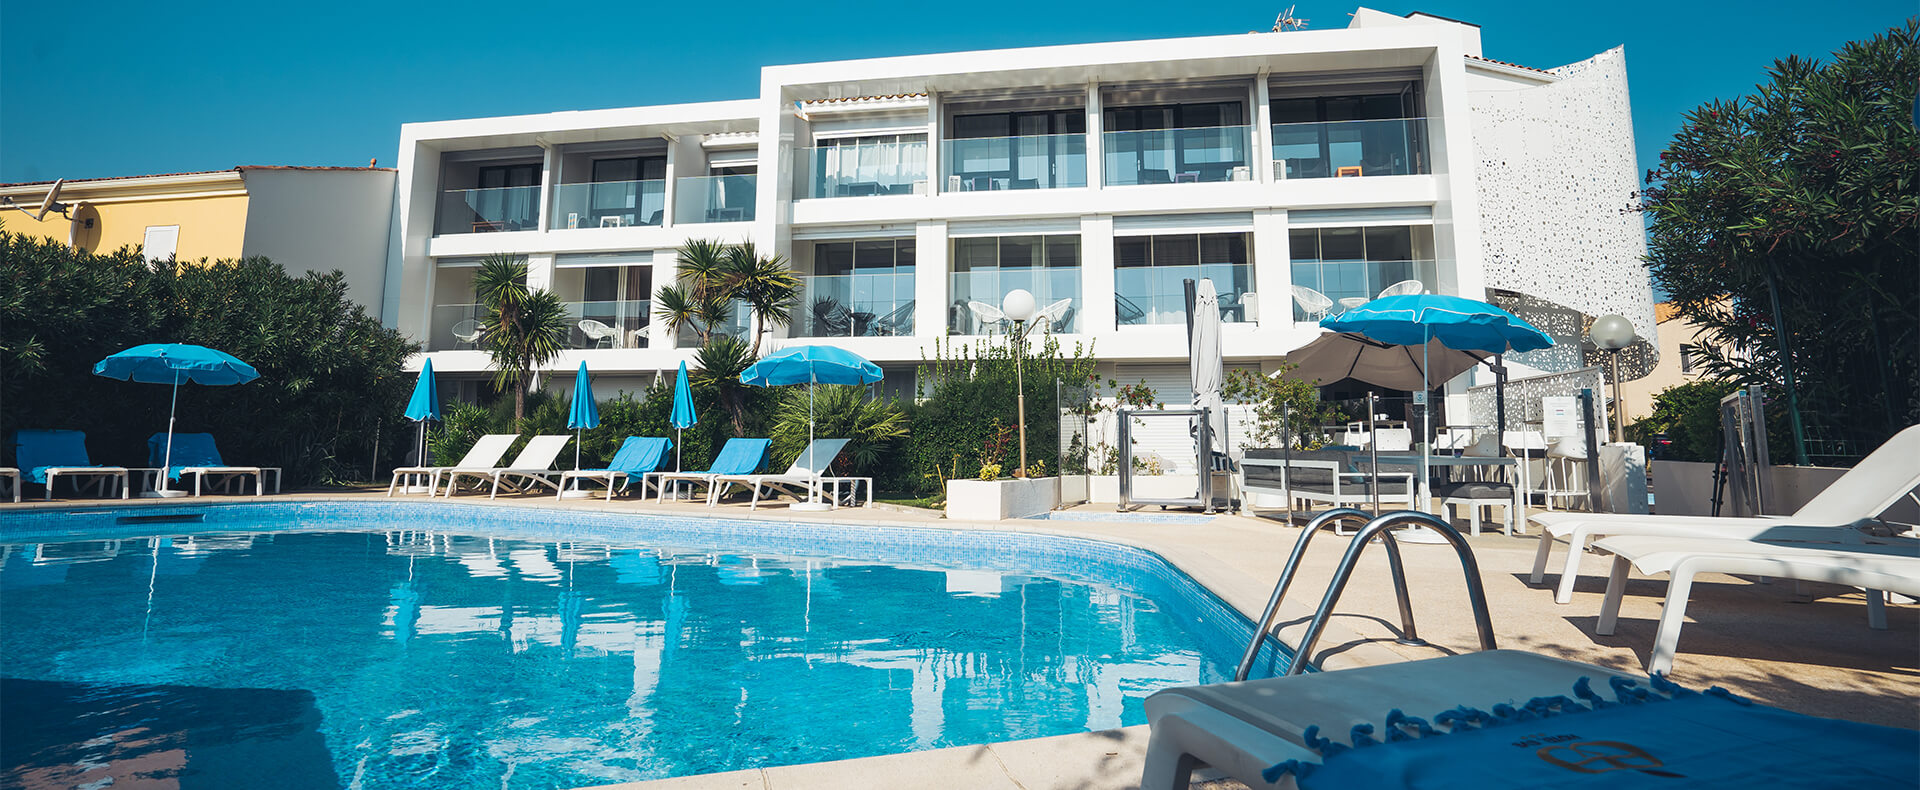 Piscina Hotel Eve, Hotel Naturista en Cap d'Agde